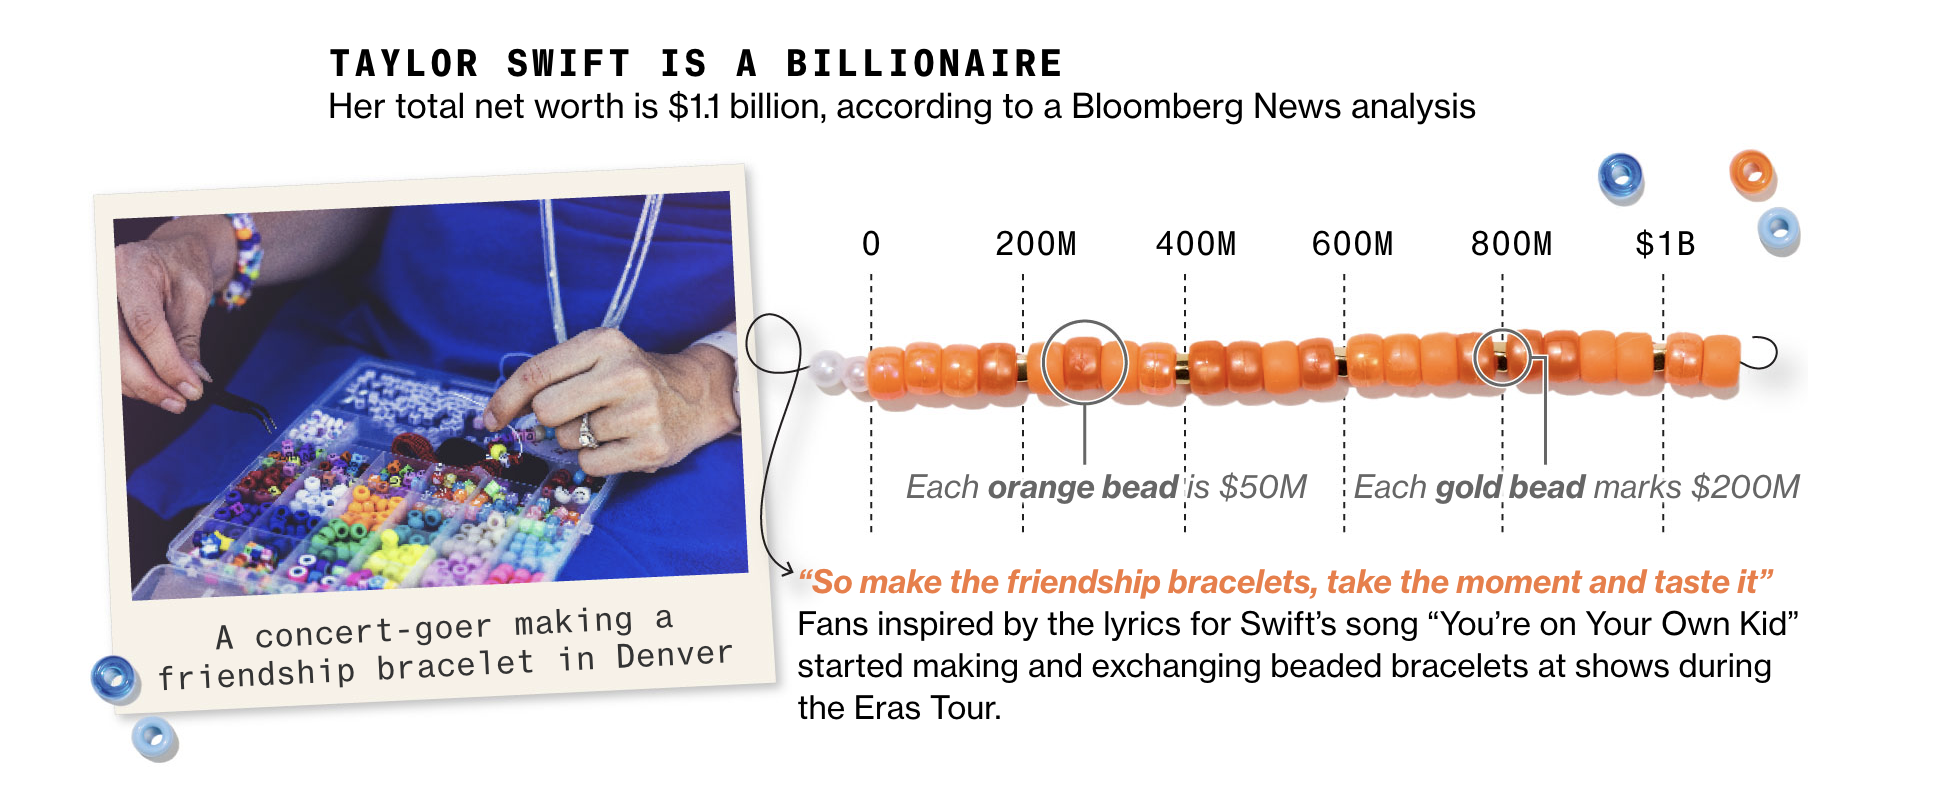 Taylor Swift is a billionaire